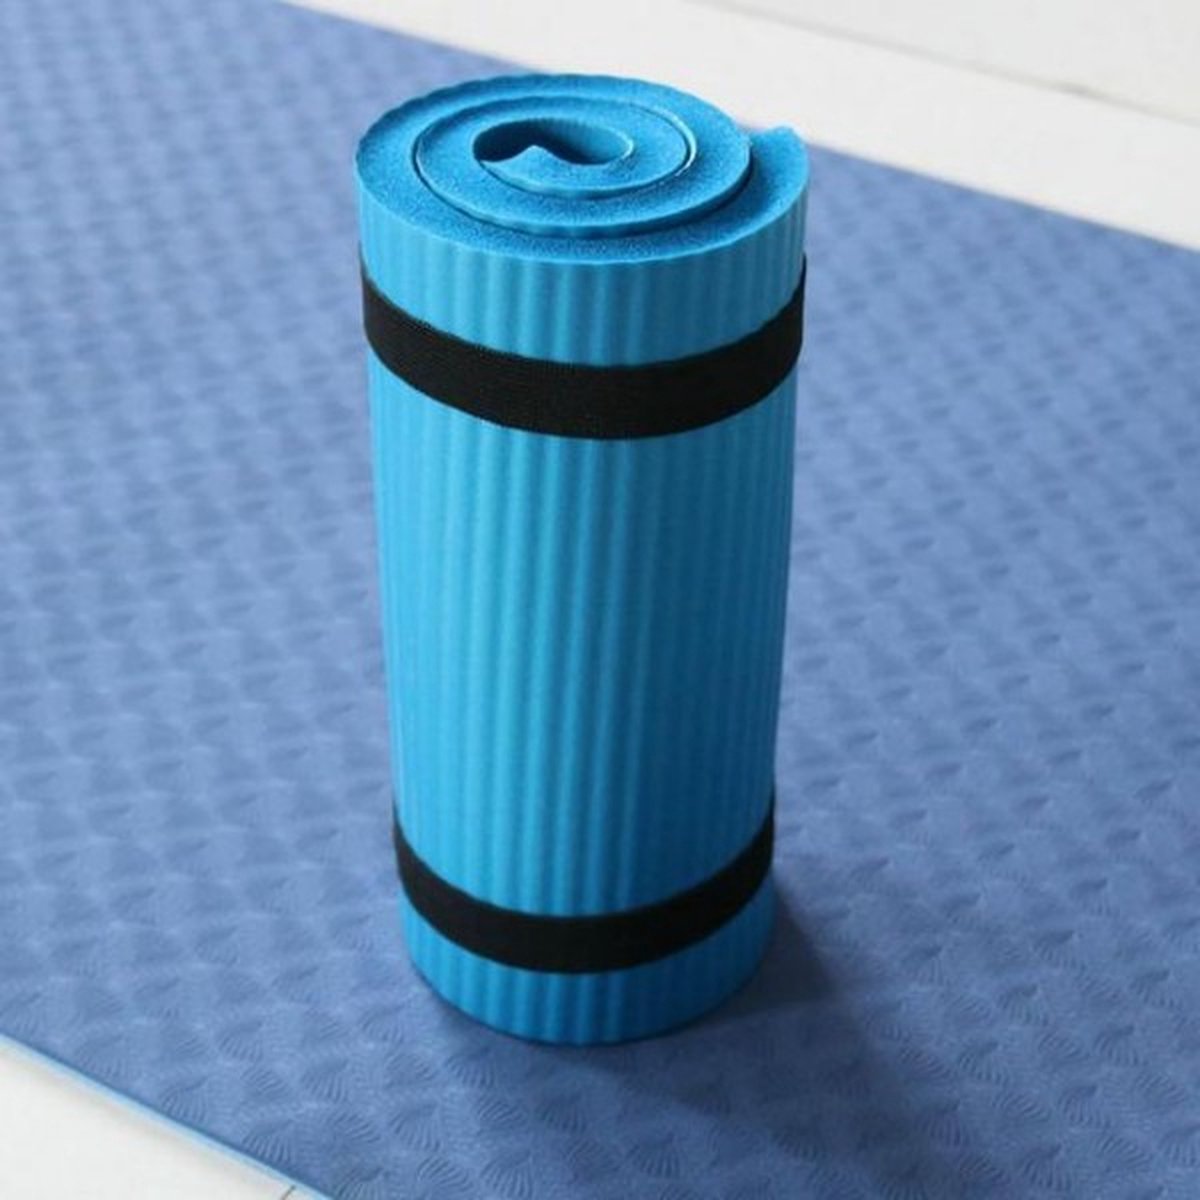 yoga-knee pads 60cmx25cm